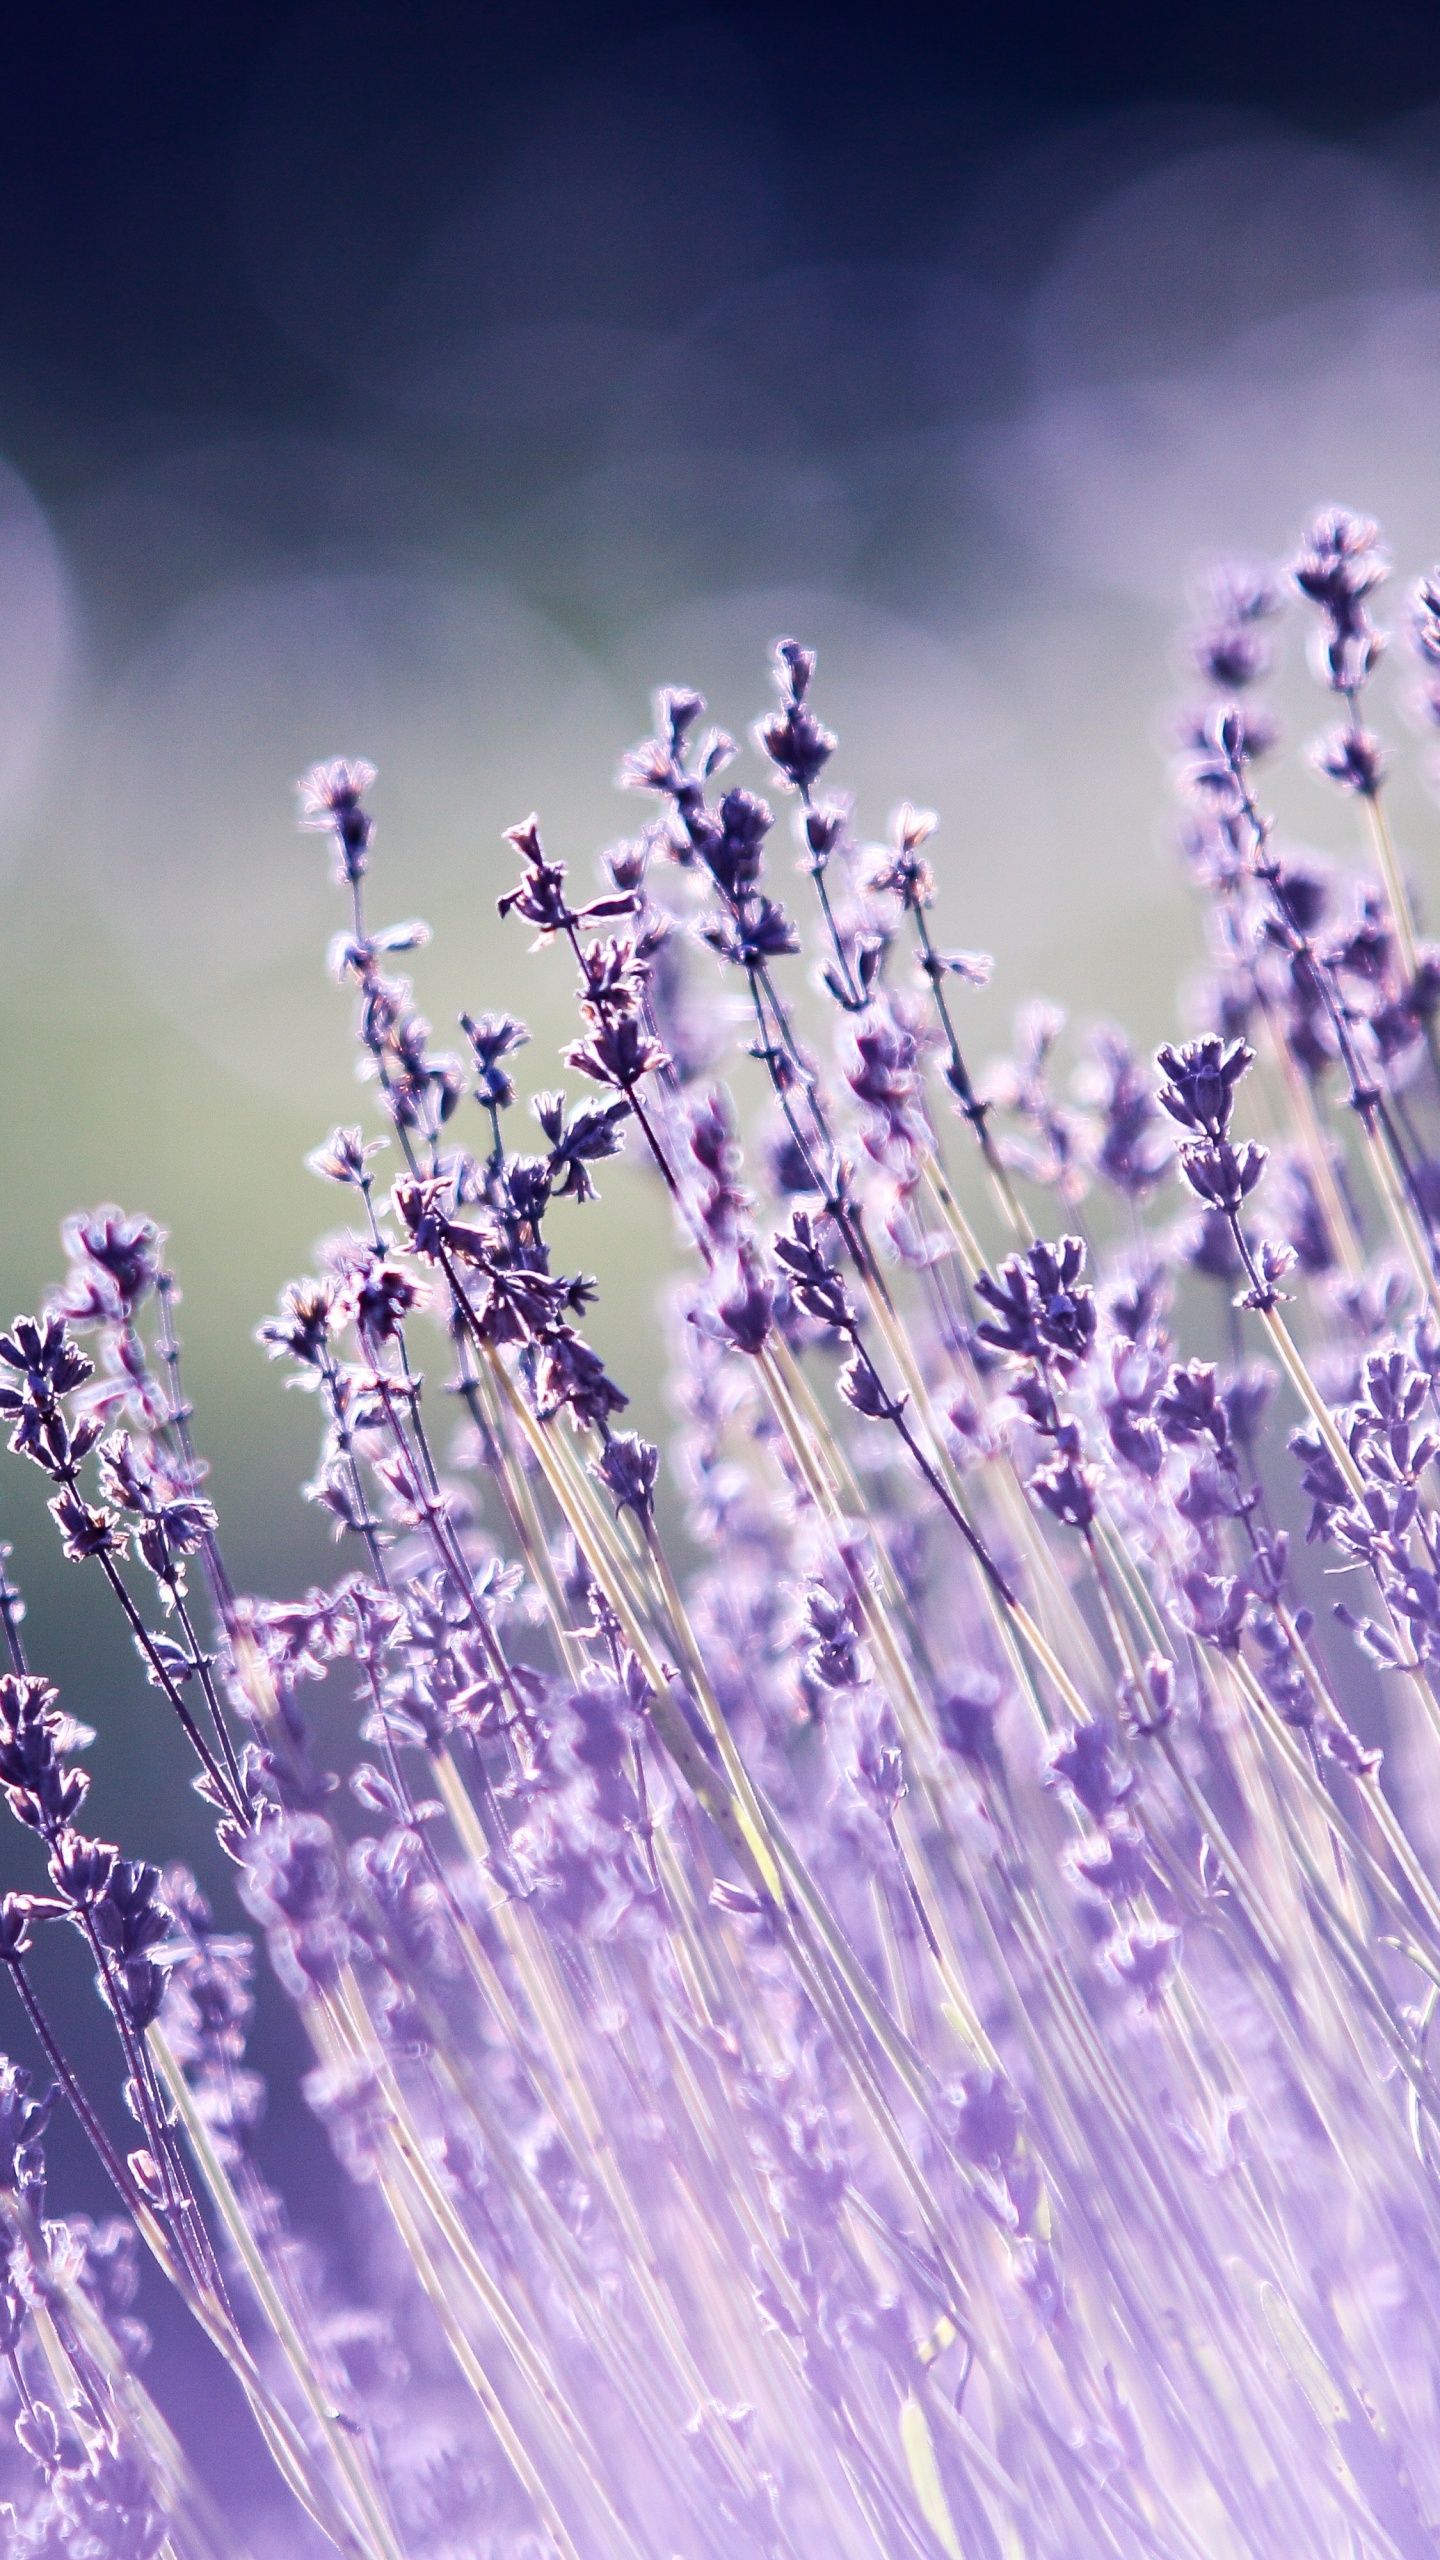 A close up of some purple flowers - Flower, purple, garden, lavender